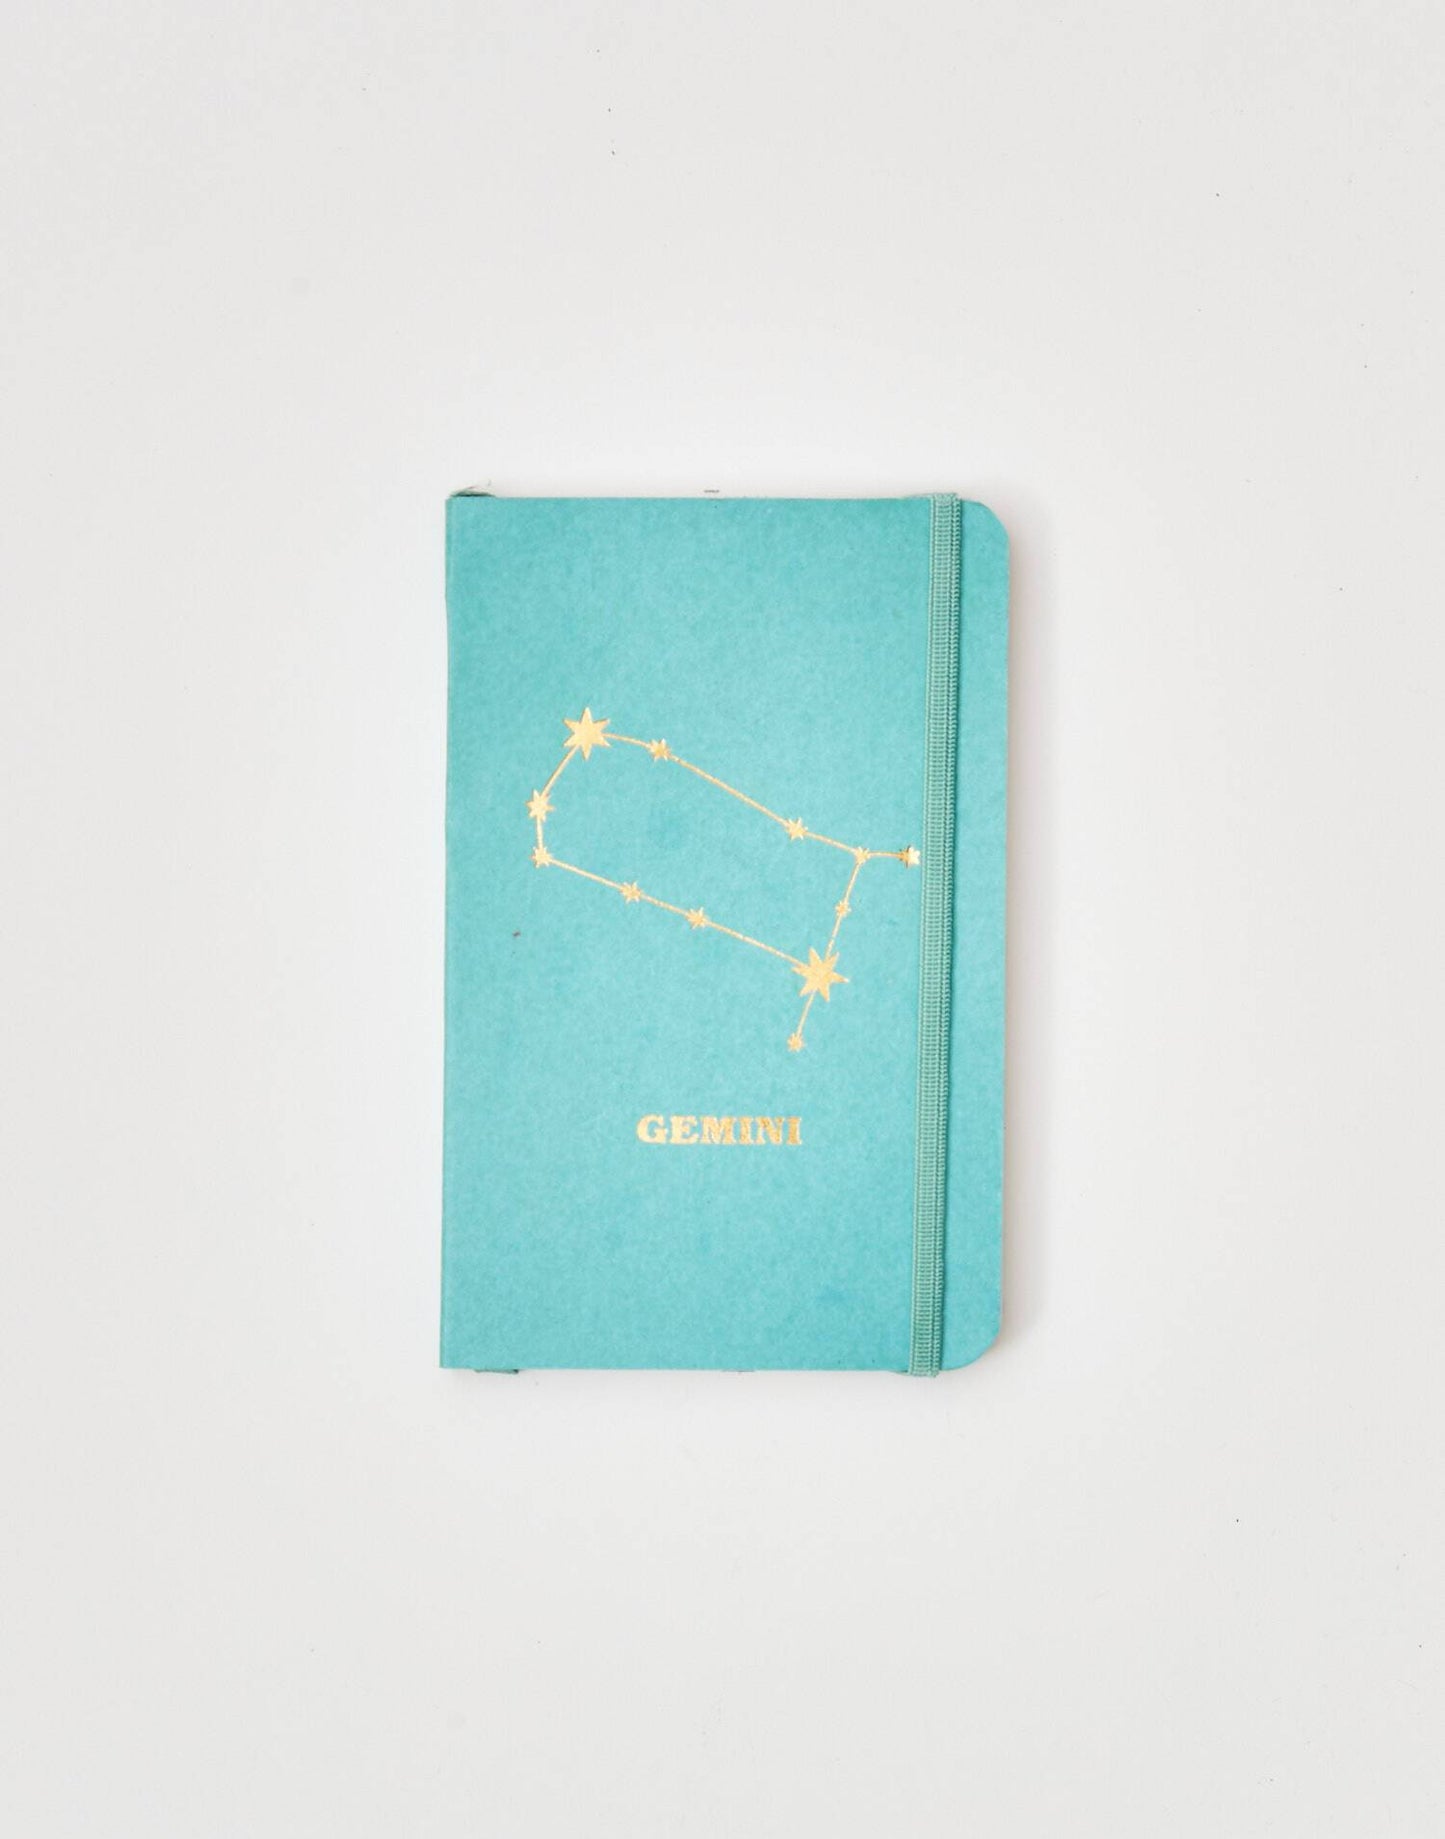 Mini horoscope notebook